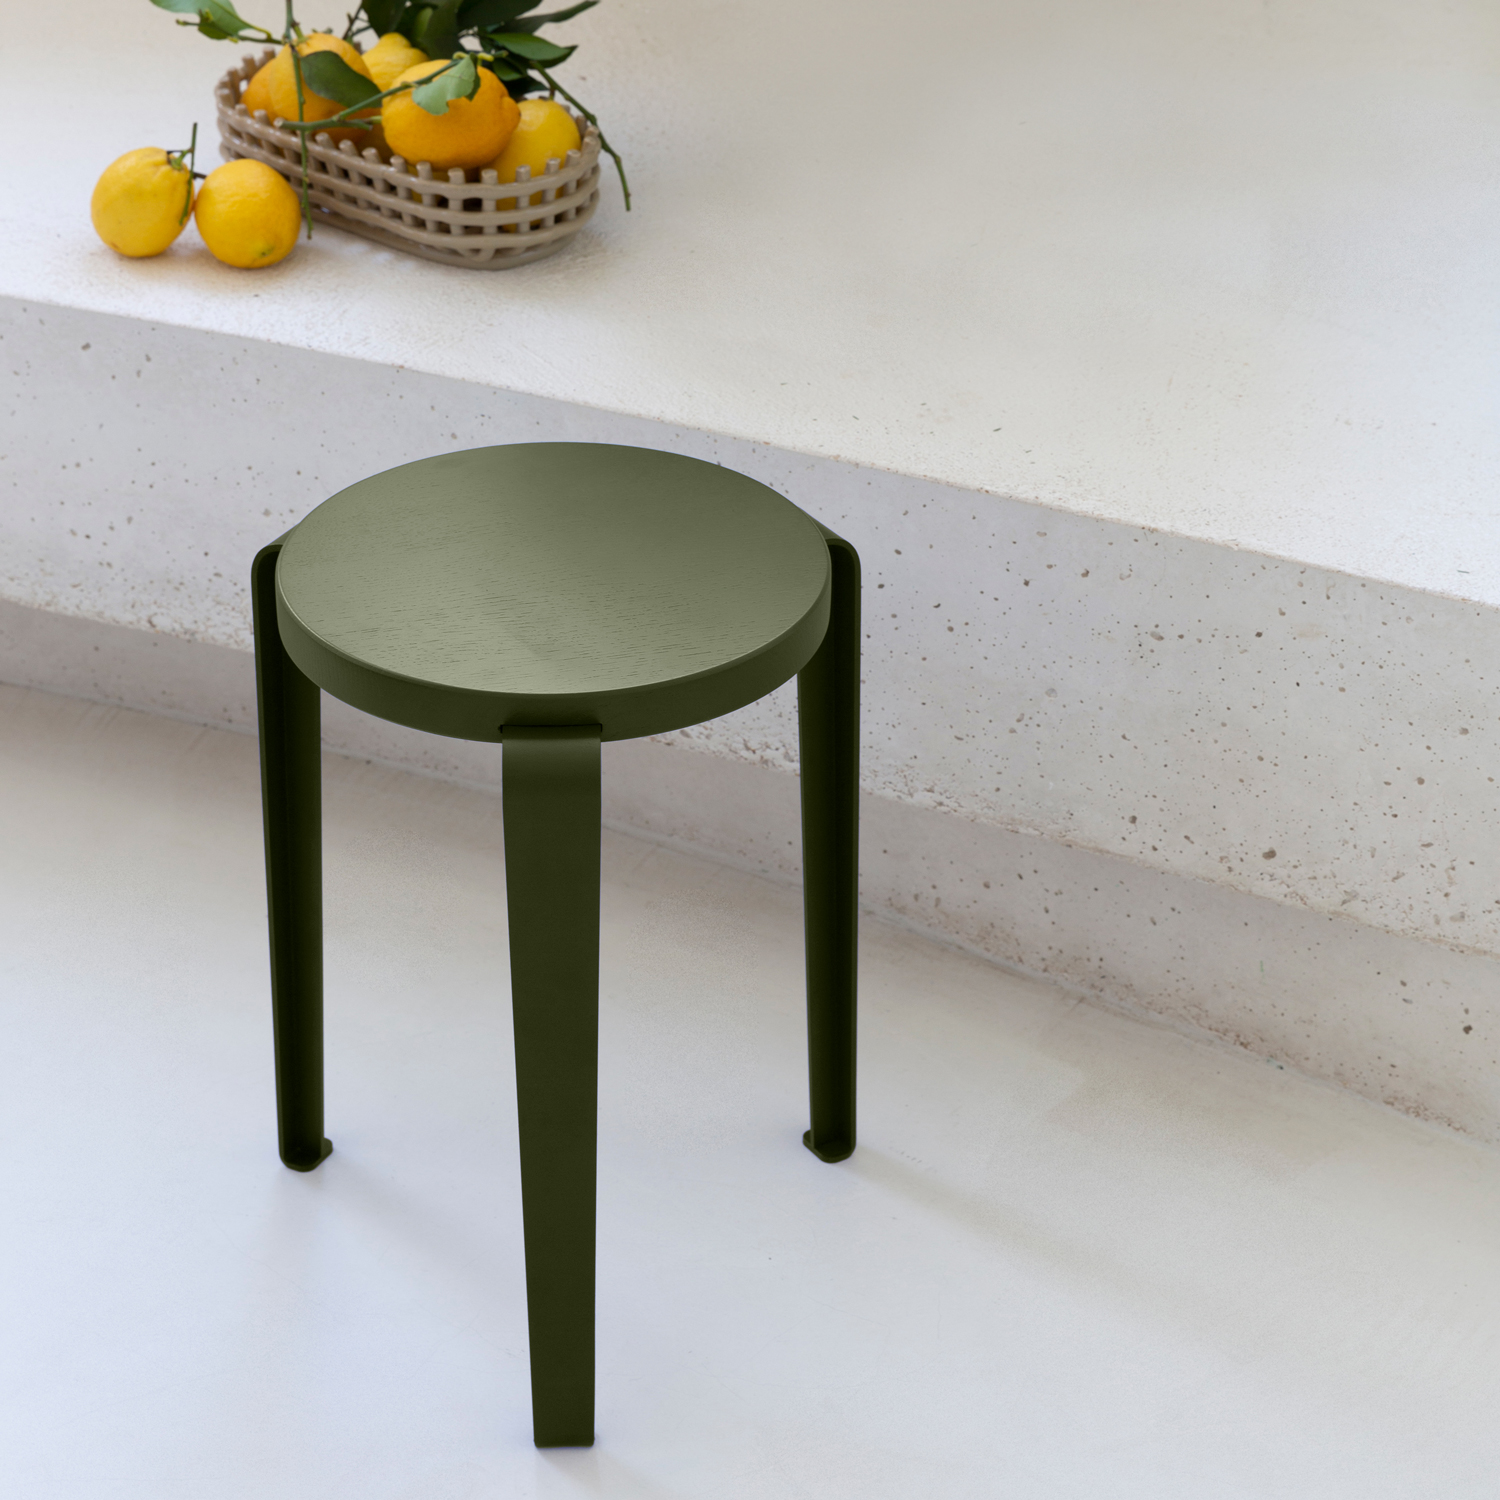 TIPTOE x MONOCLE - LOU stool